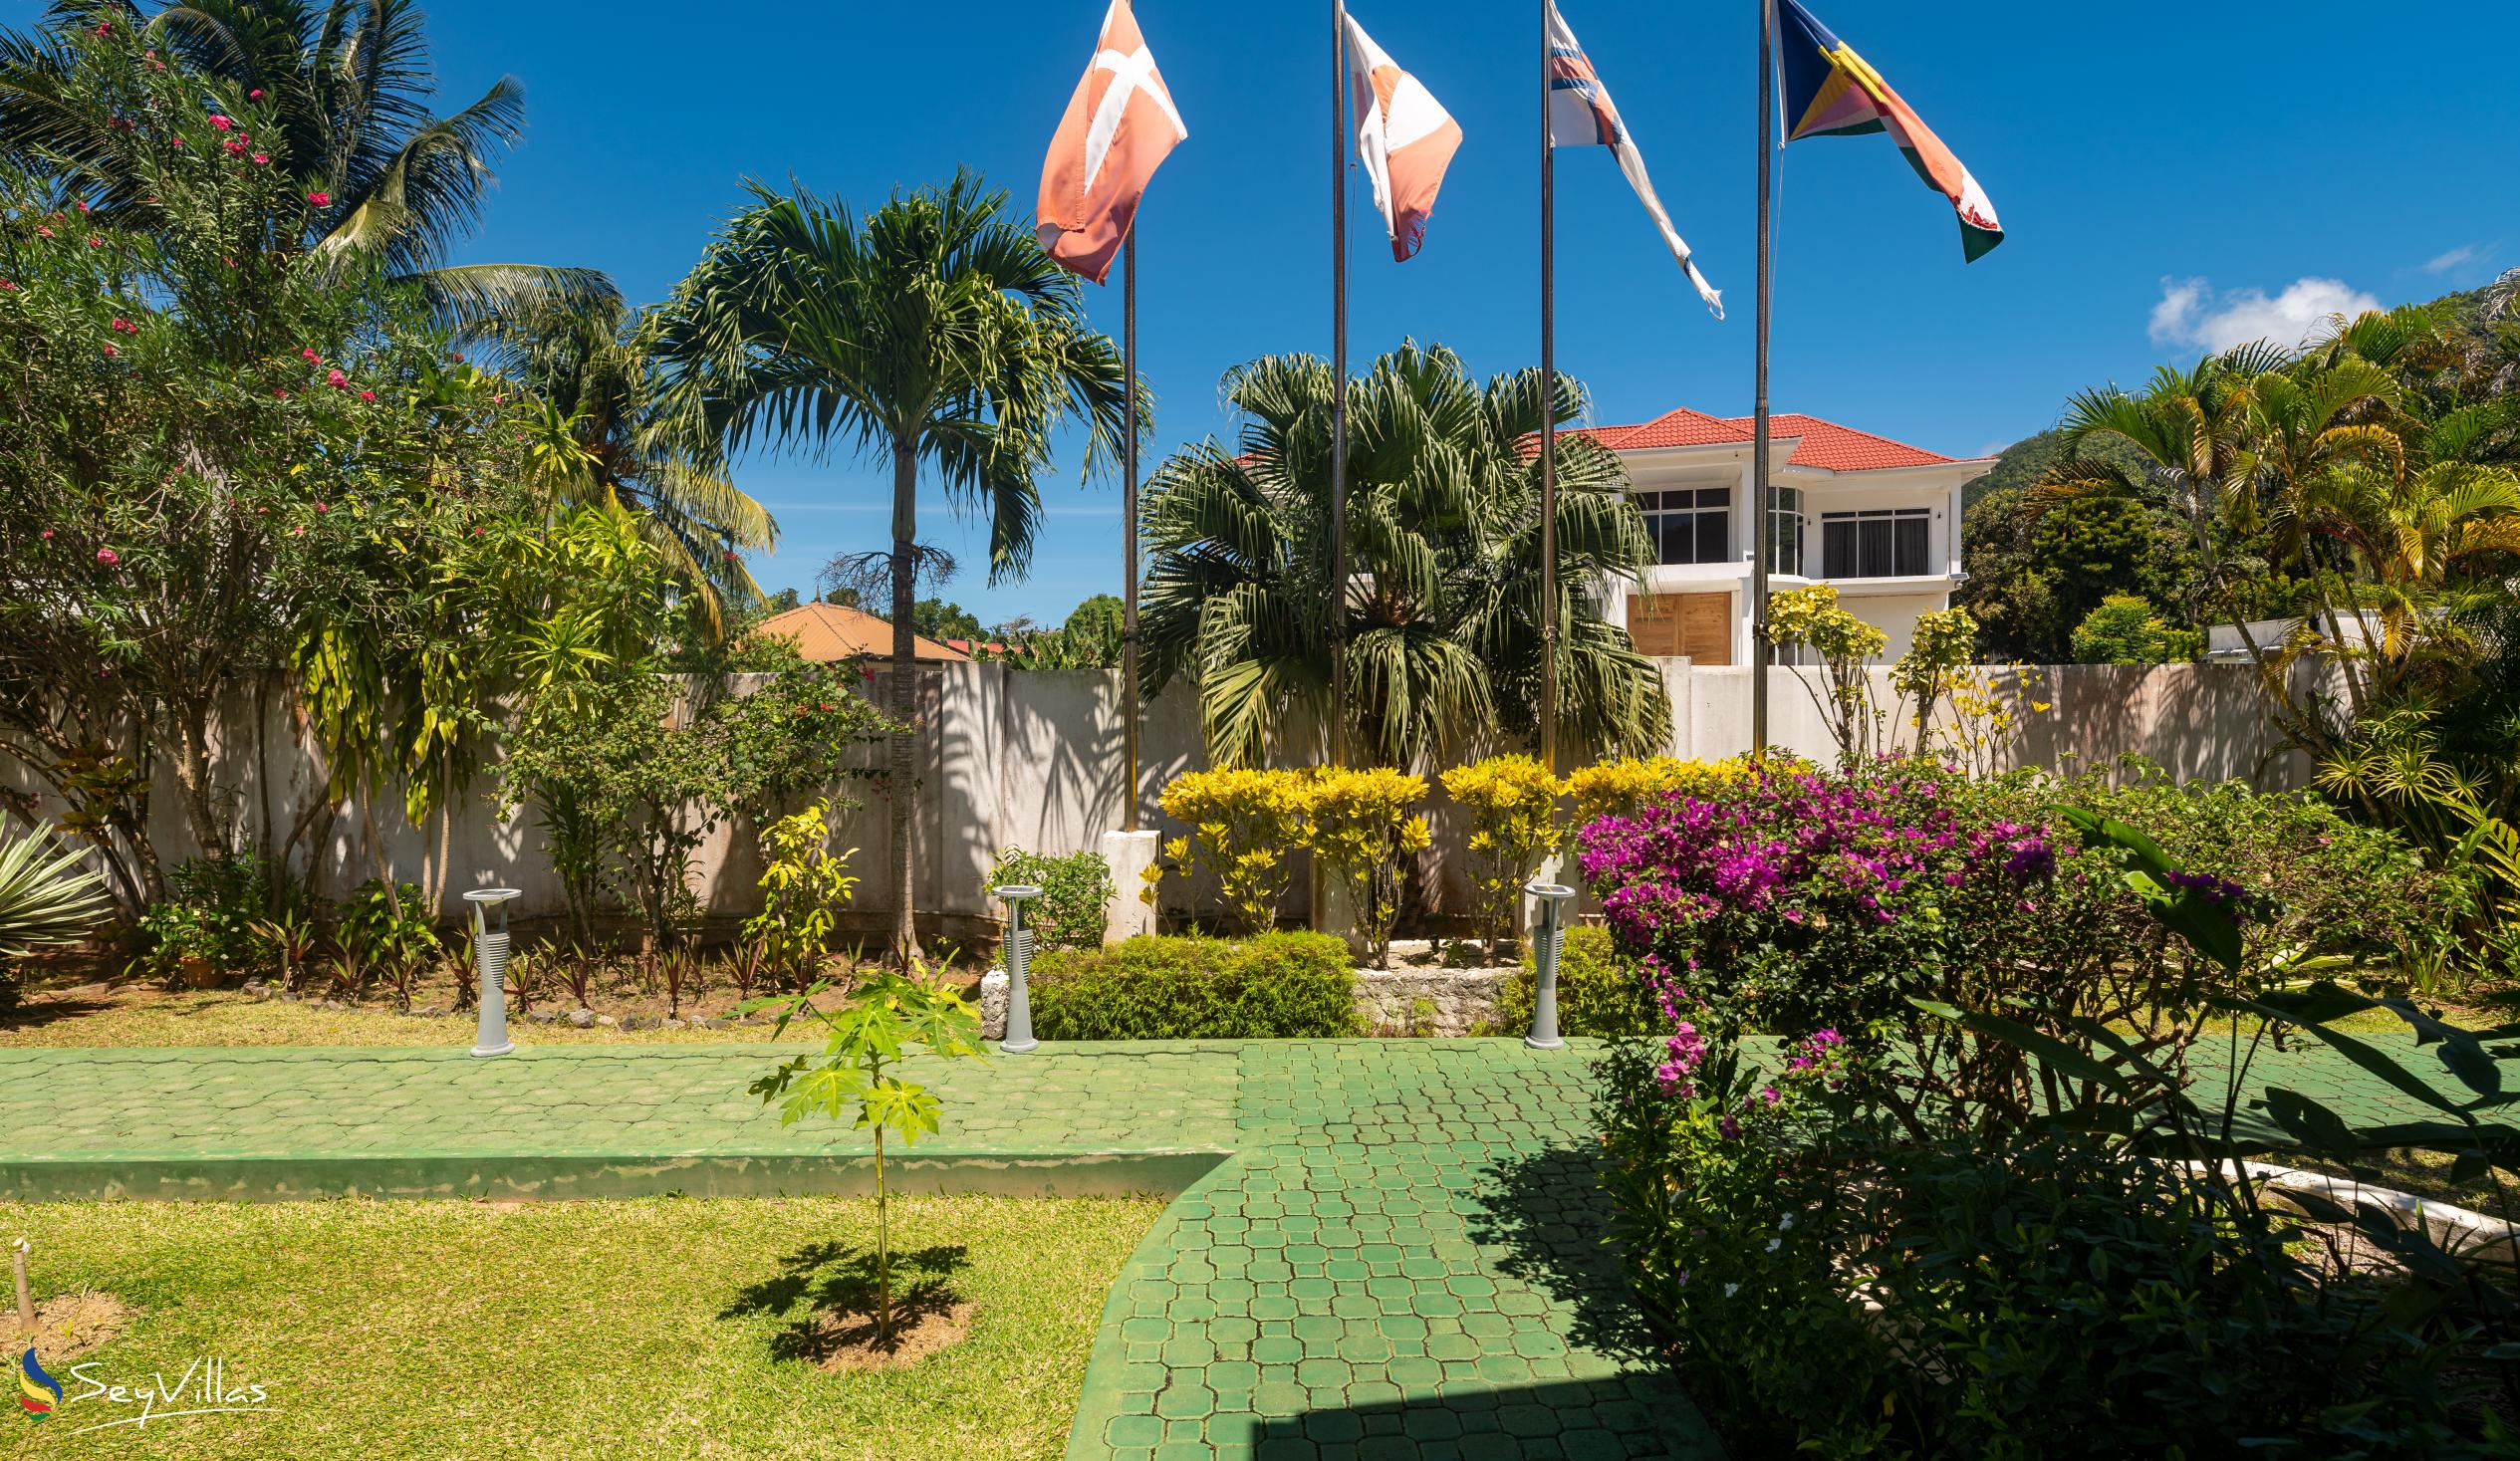 Foto 17: Villa Caballero - Esterno - Mahé (Seychelles)